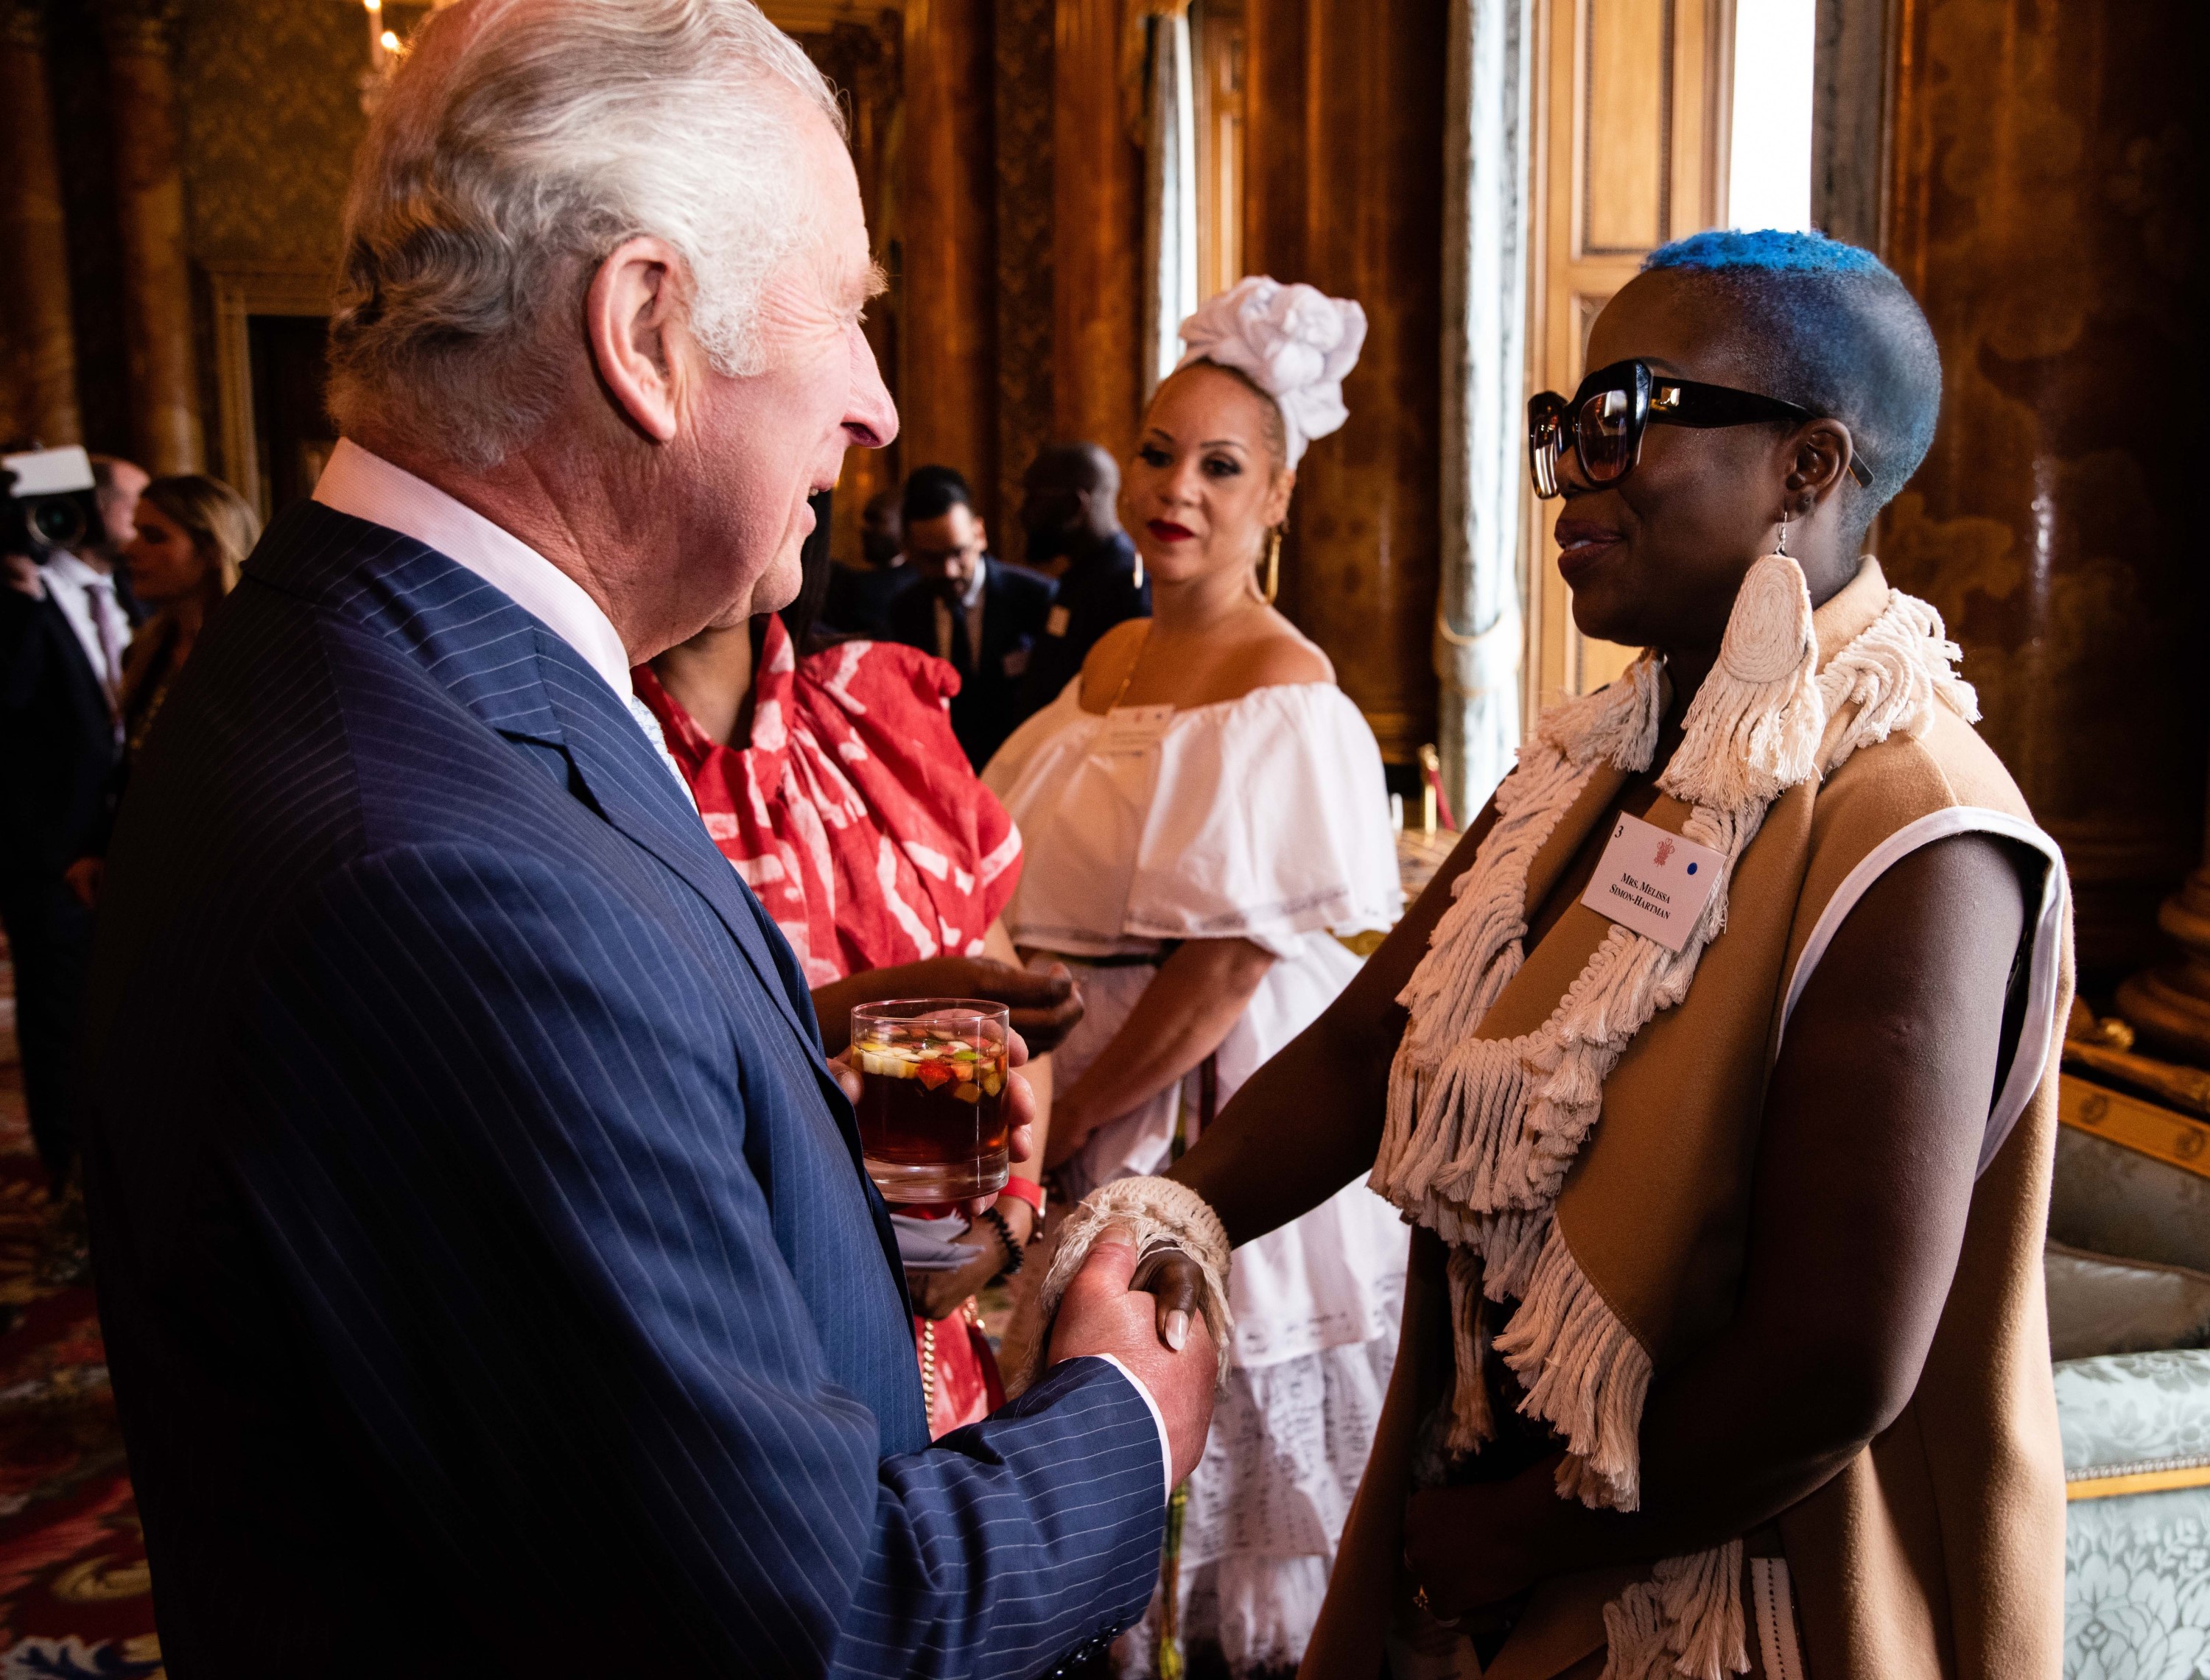 Melissa Simon-Hartman met with HRH Prince Charles at Buckingham Palace